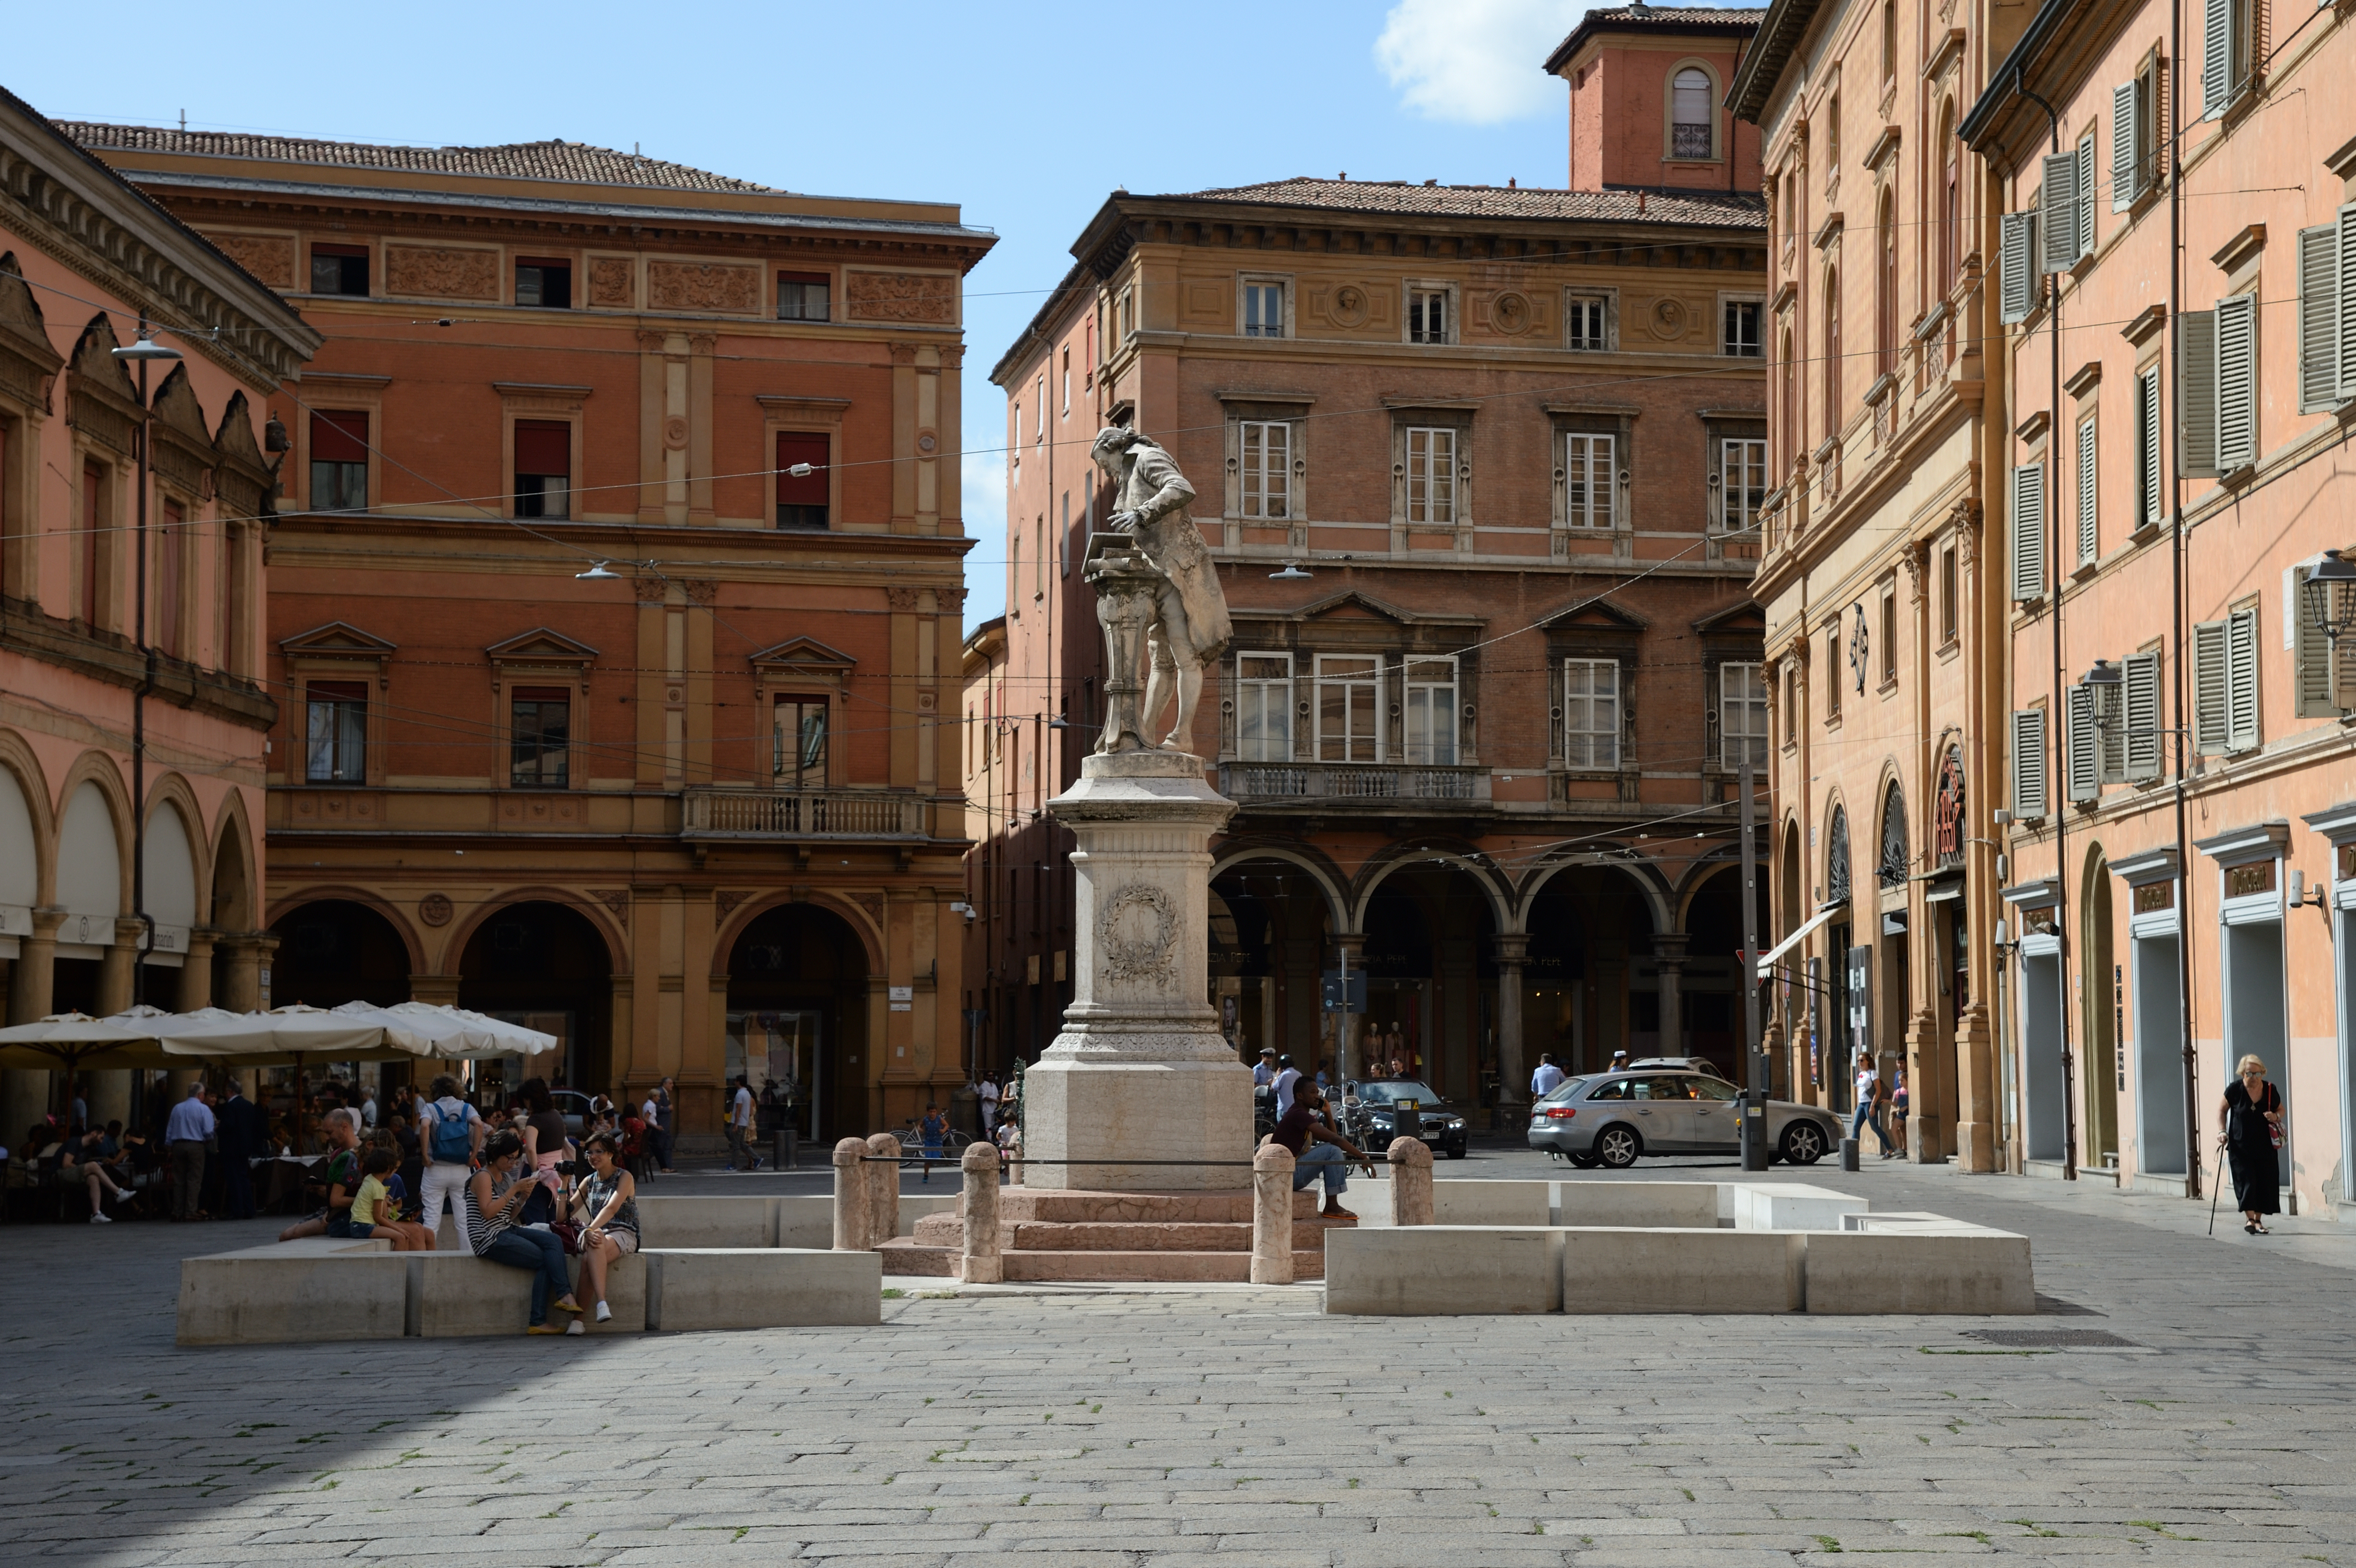 photo: https://upload.wikimedia.org/wikipedia/commons/c/c6/Bologna_-_Piazza_Galvani.jpg